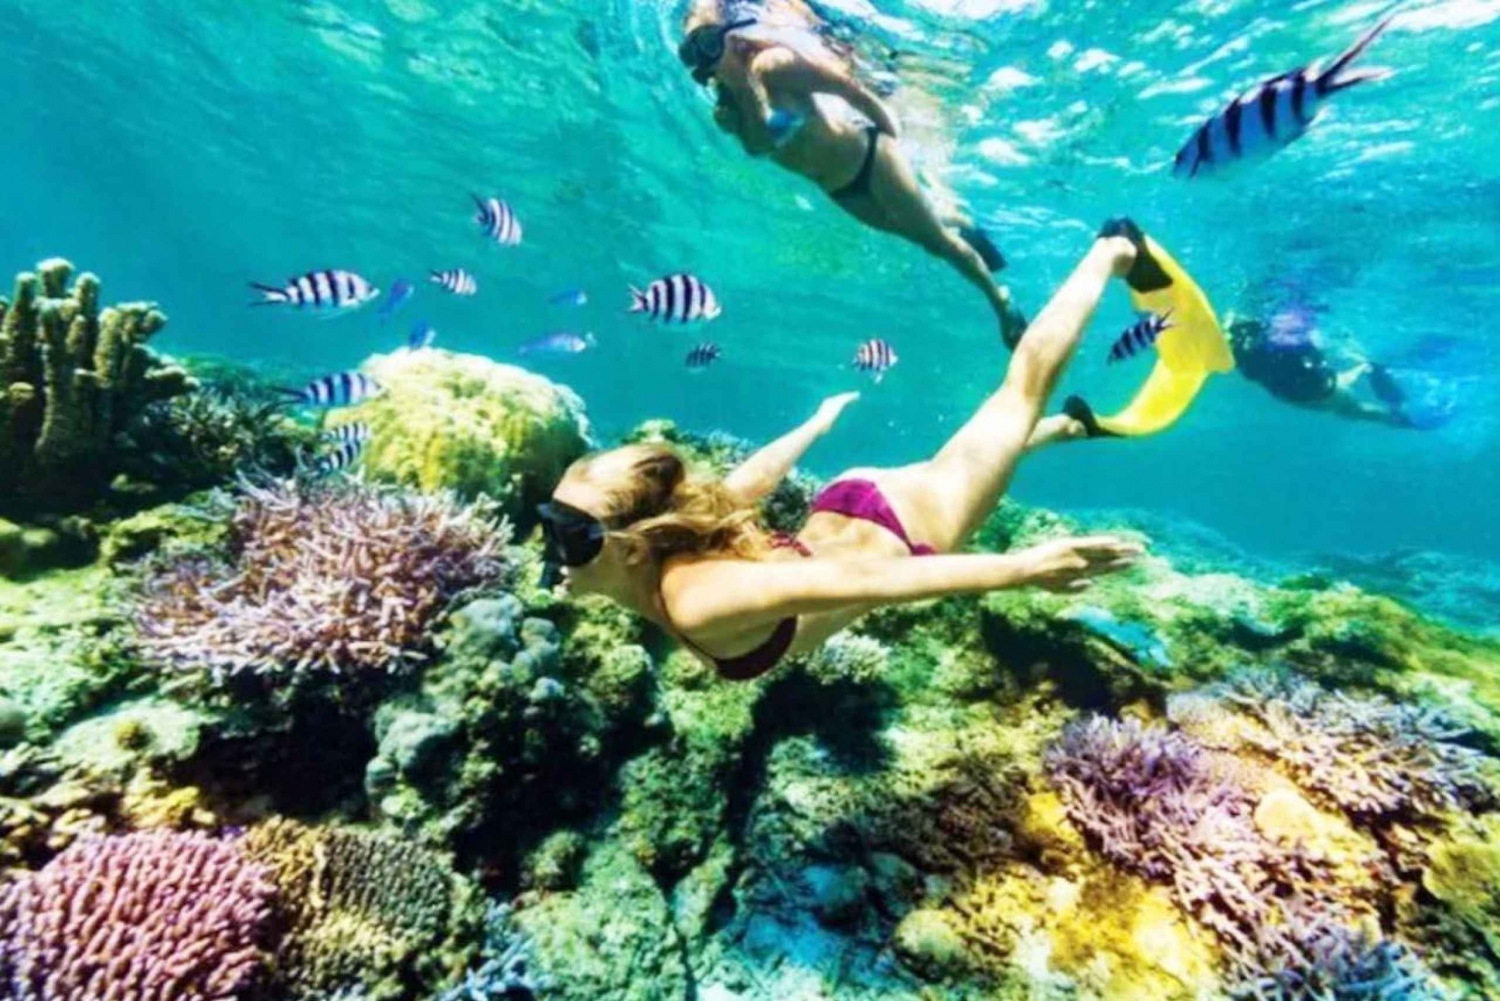 Bali: All-Inclusive Snorkeling at Blue Lagoon Beach